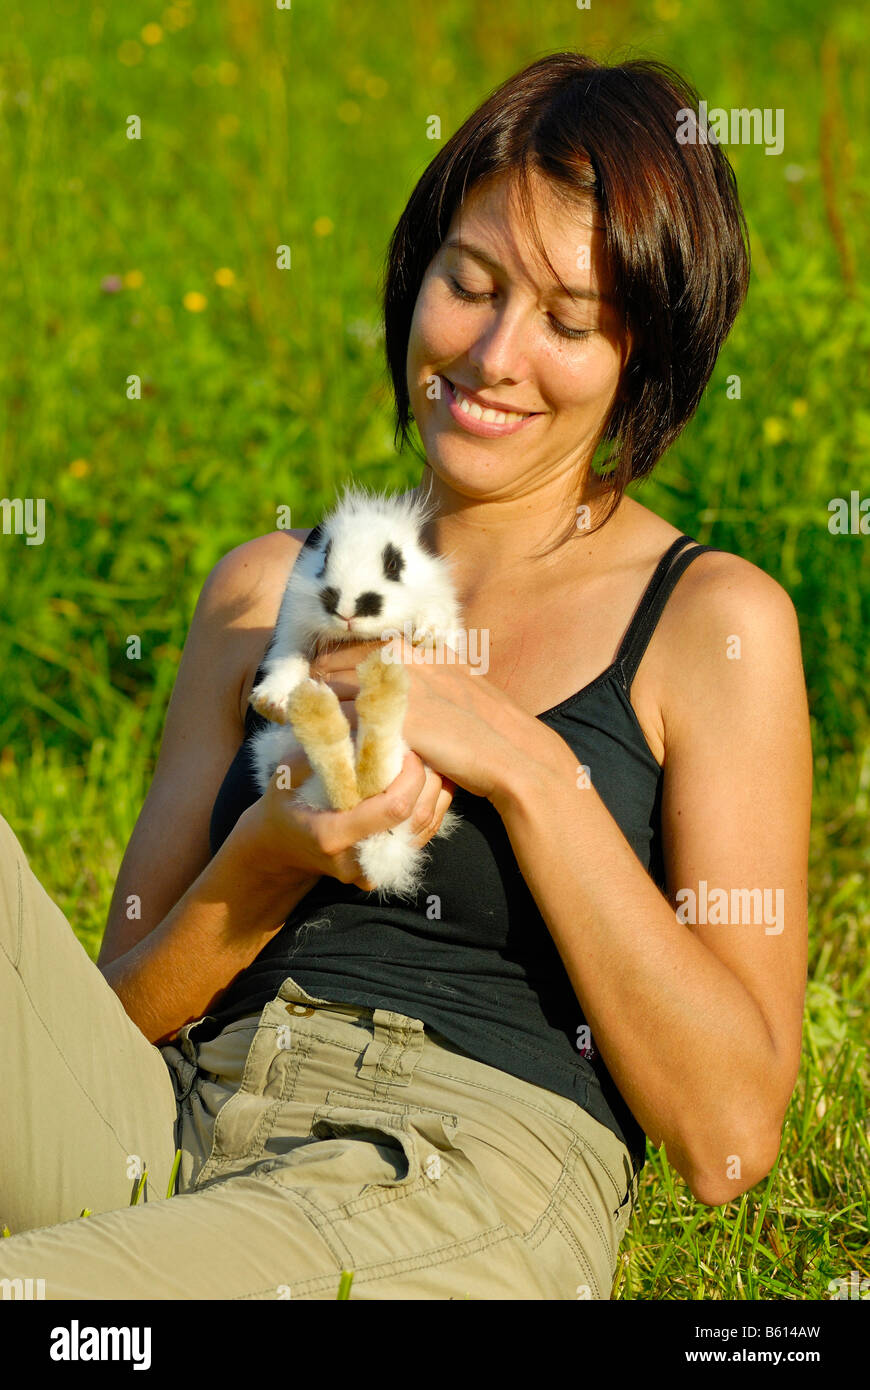 Young woman holding a Pygmy Rabbit (Brachylagus idahoensis) Stock Photo